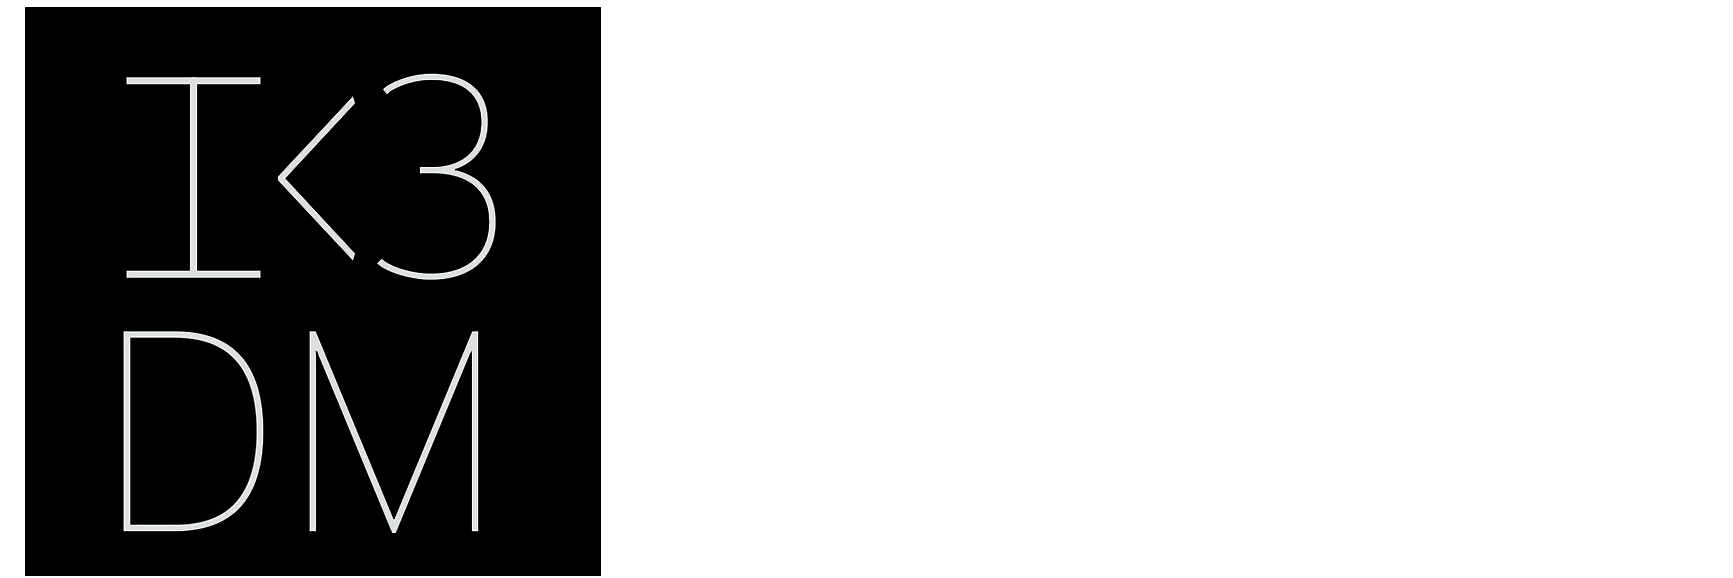 IDM Showcase Fall 2022 Header Image